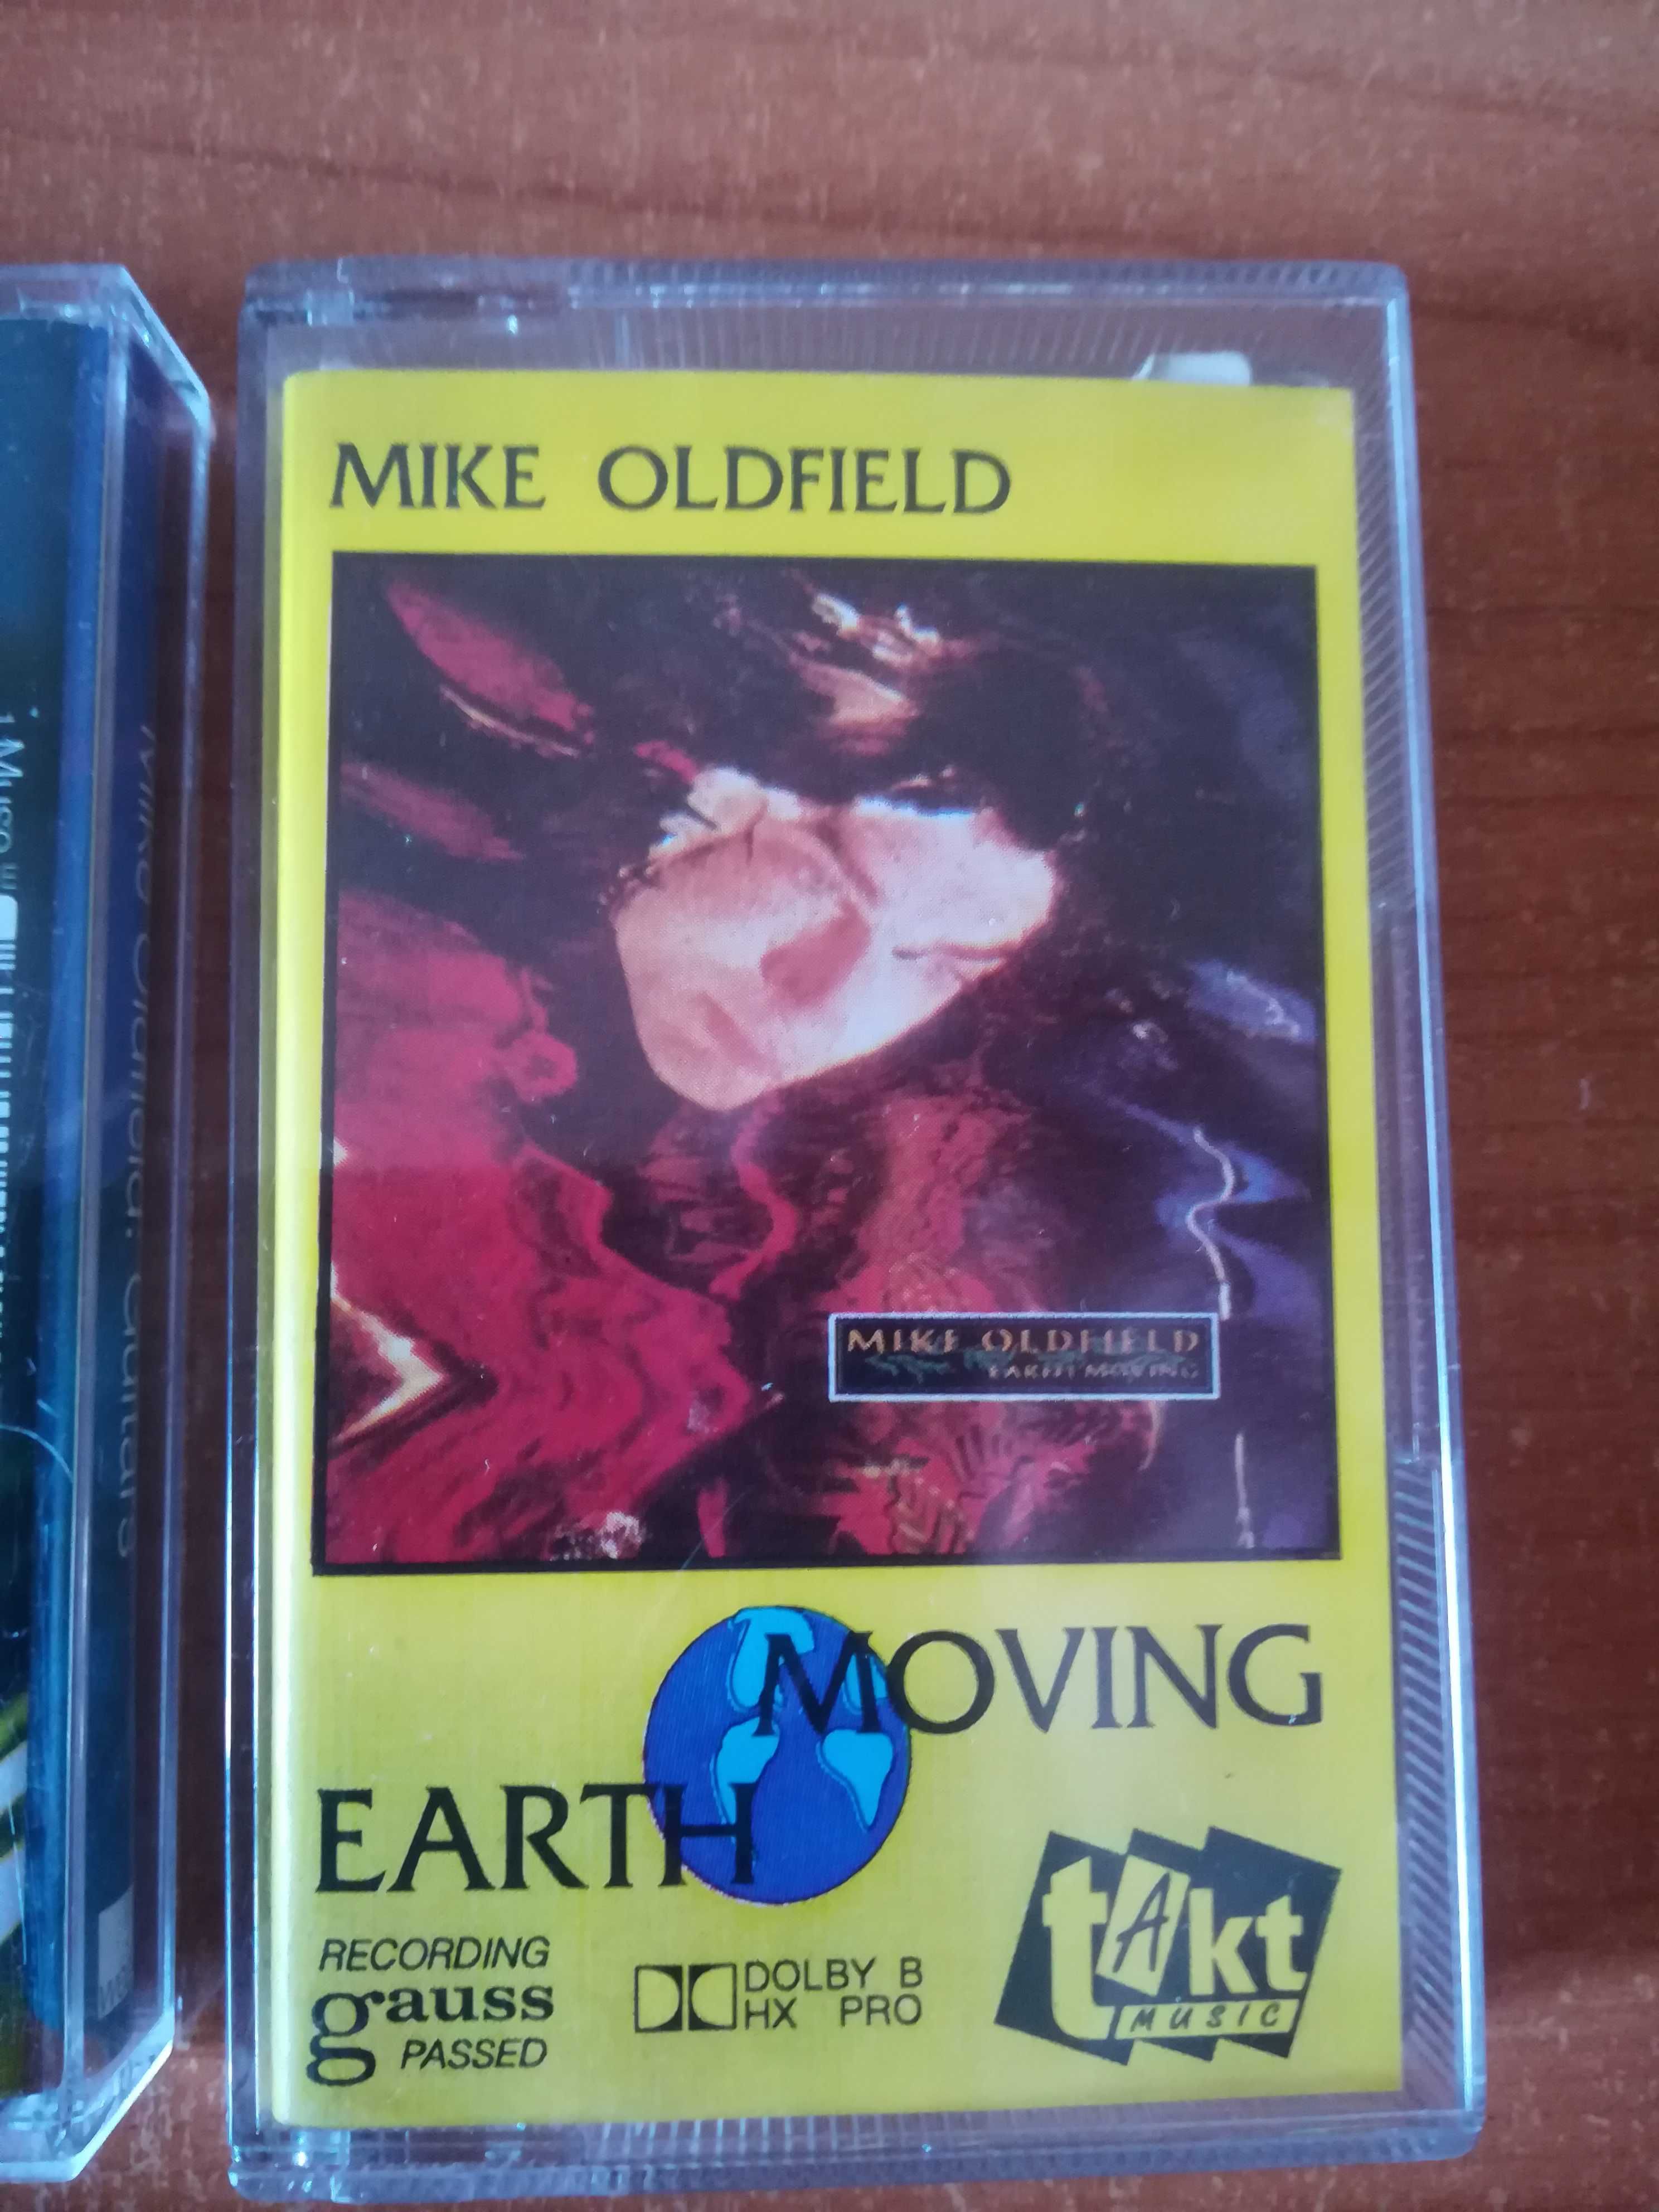 kasety magnetofonowe Mike Oldfield zestaw 4 kaset